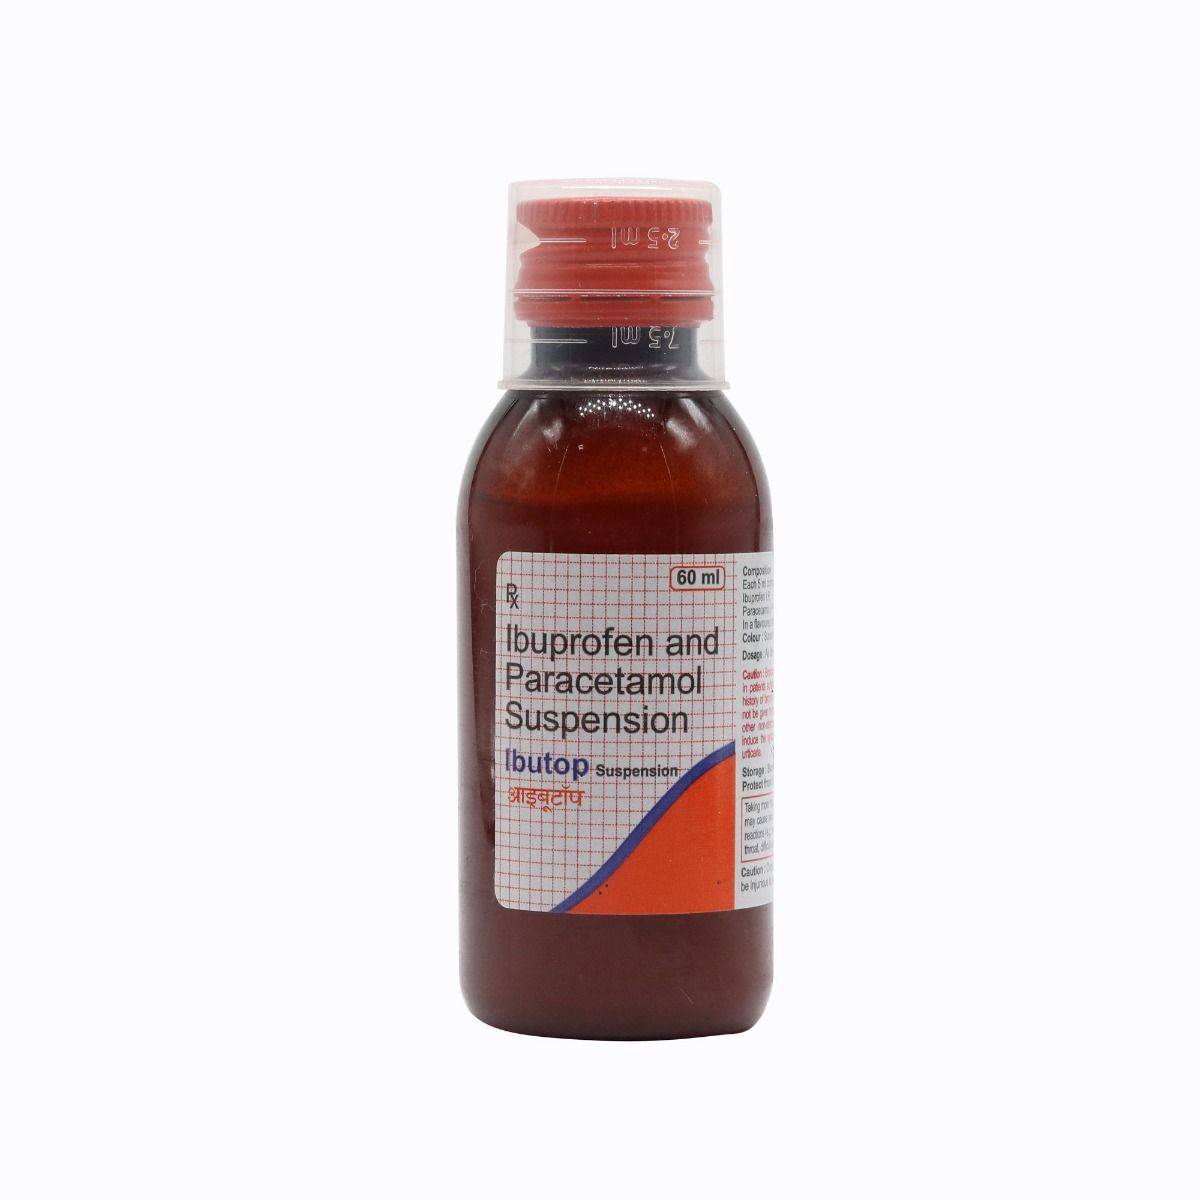 Ibutop syrup uses